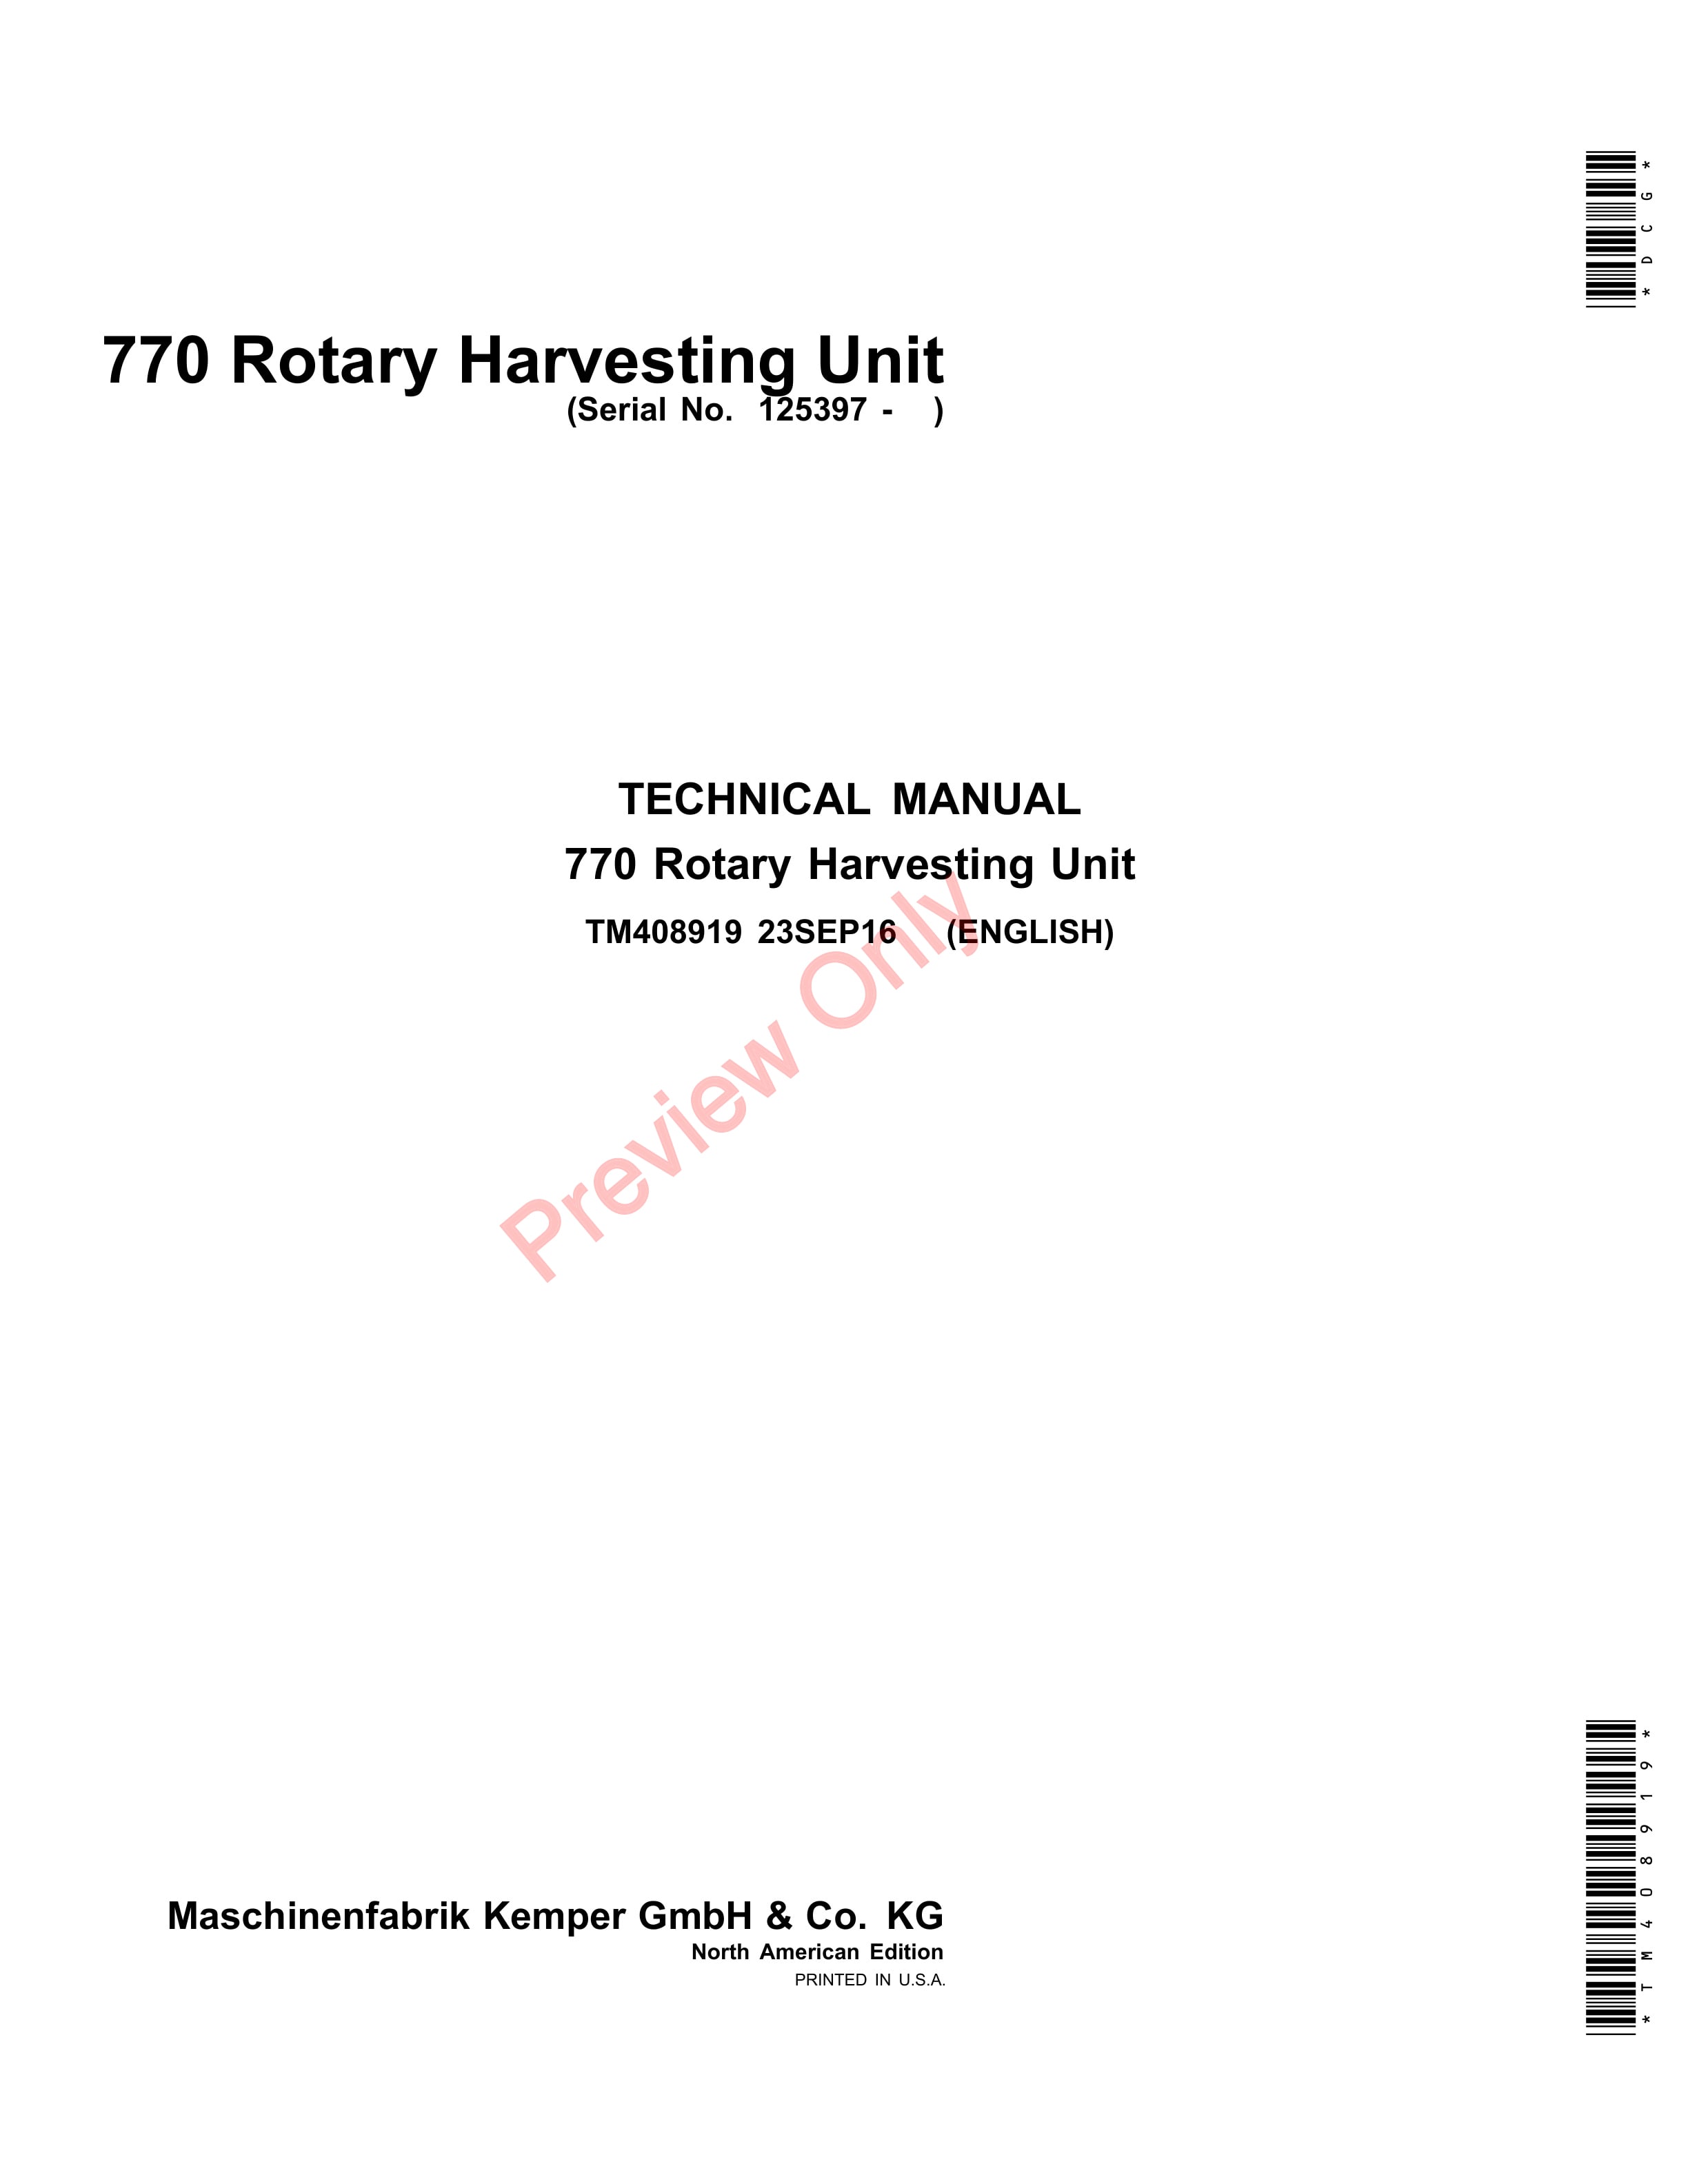 John Deere 770 Rotary Harvesting Unit Technical Manual TM408919 23SEP16 1